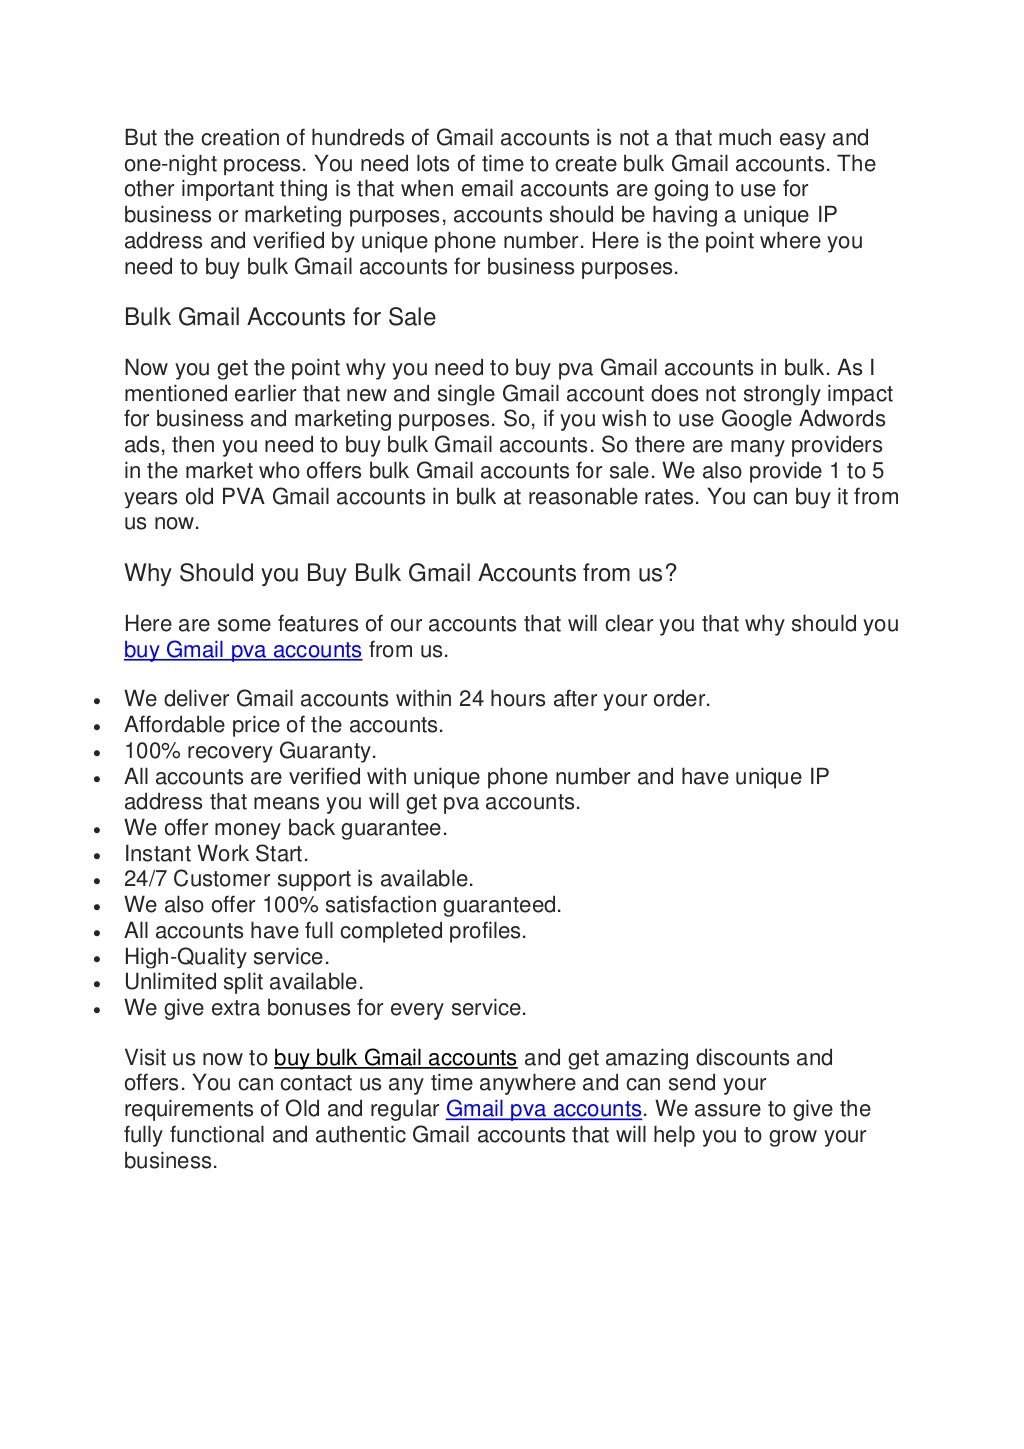 Why Should Buy Bulk Gmail Accounts?